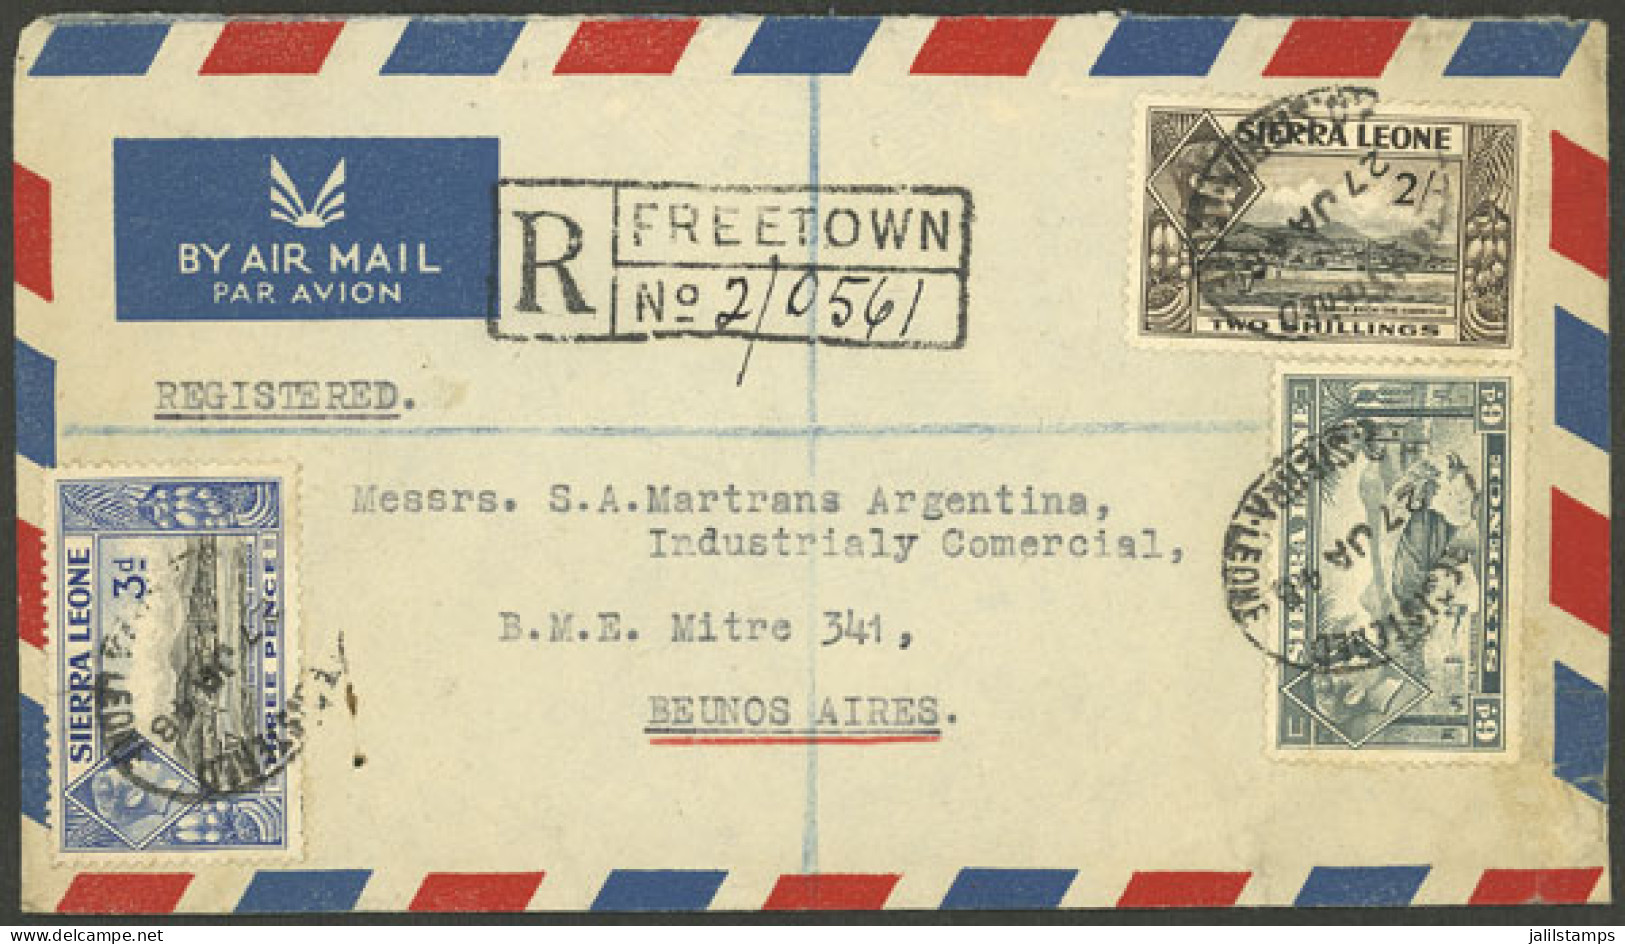 SIERRA LEONE: 27/JA/1948 Fretown - Argentina, Registered Airmail Cover, Rare Destination, VF Quality! - Sierra Leone (...-1960)